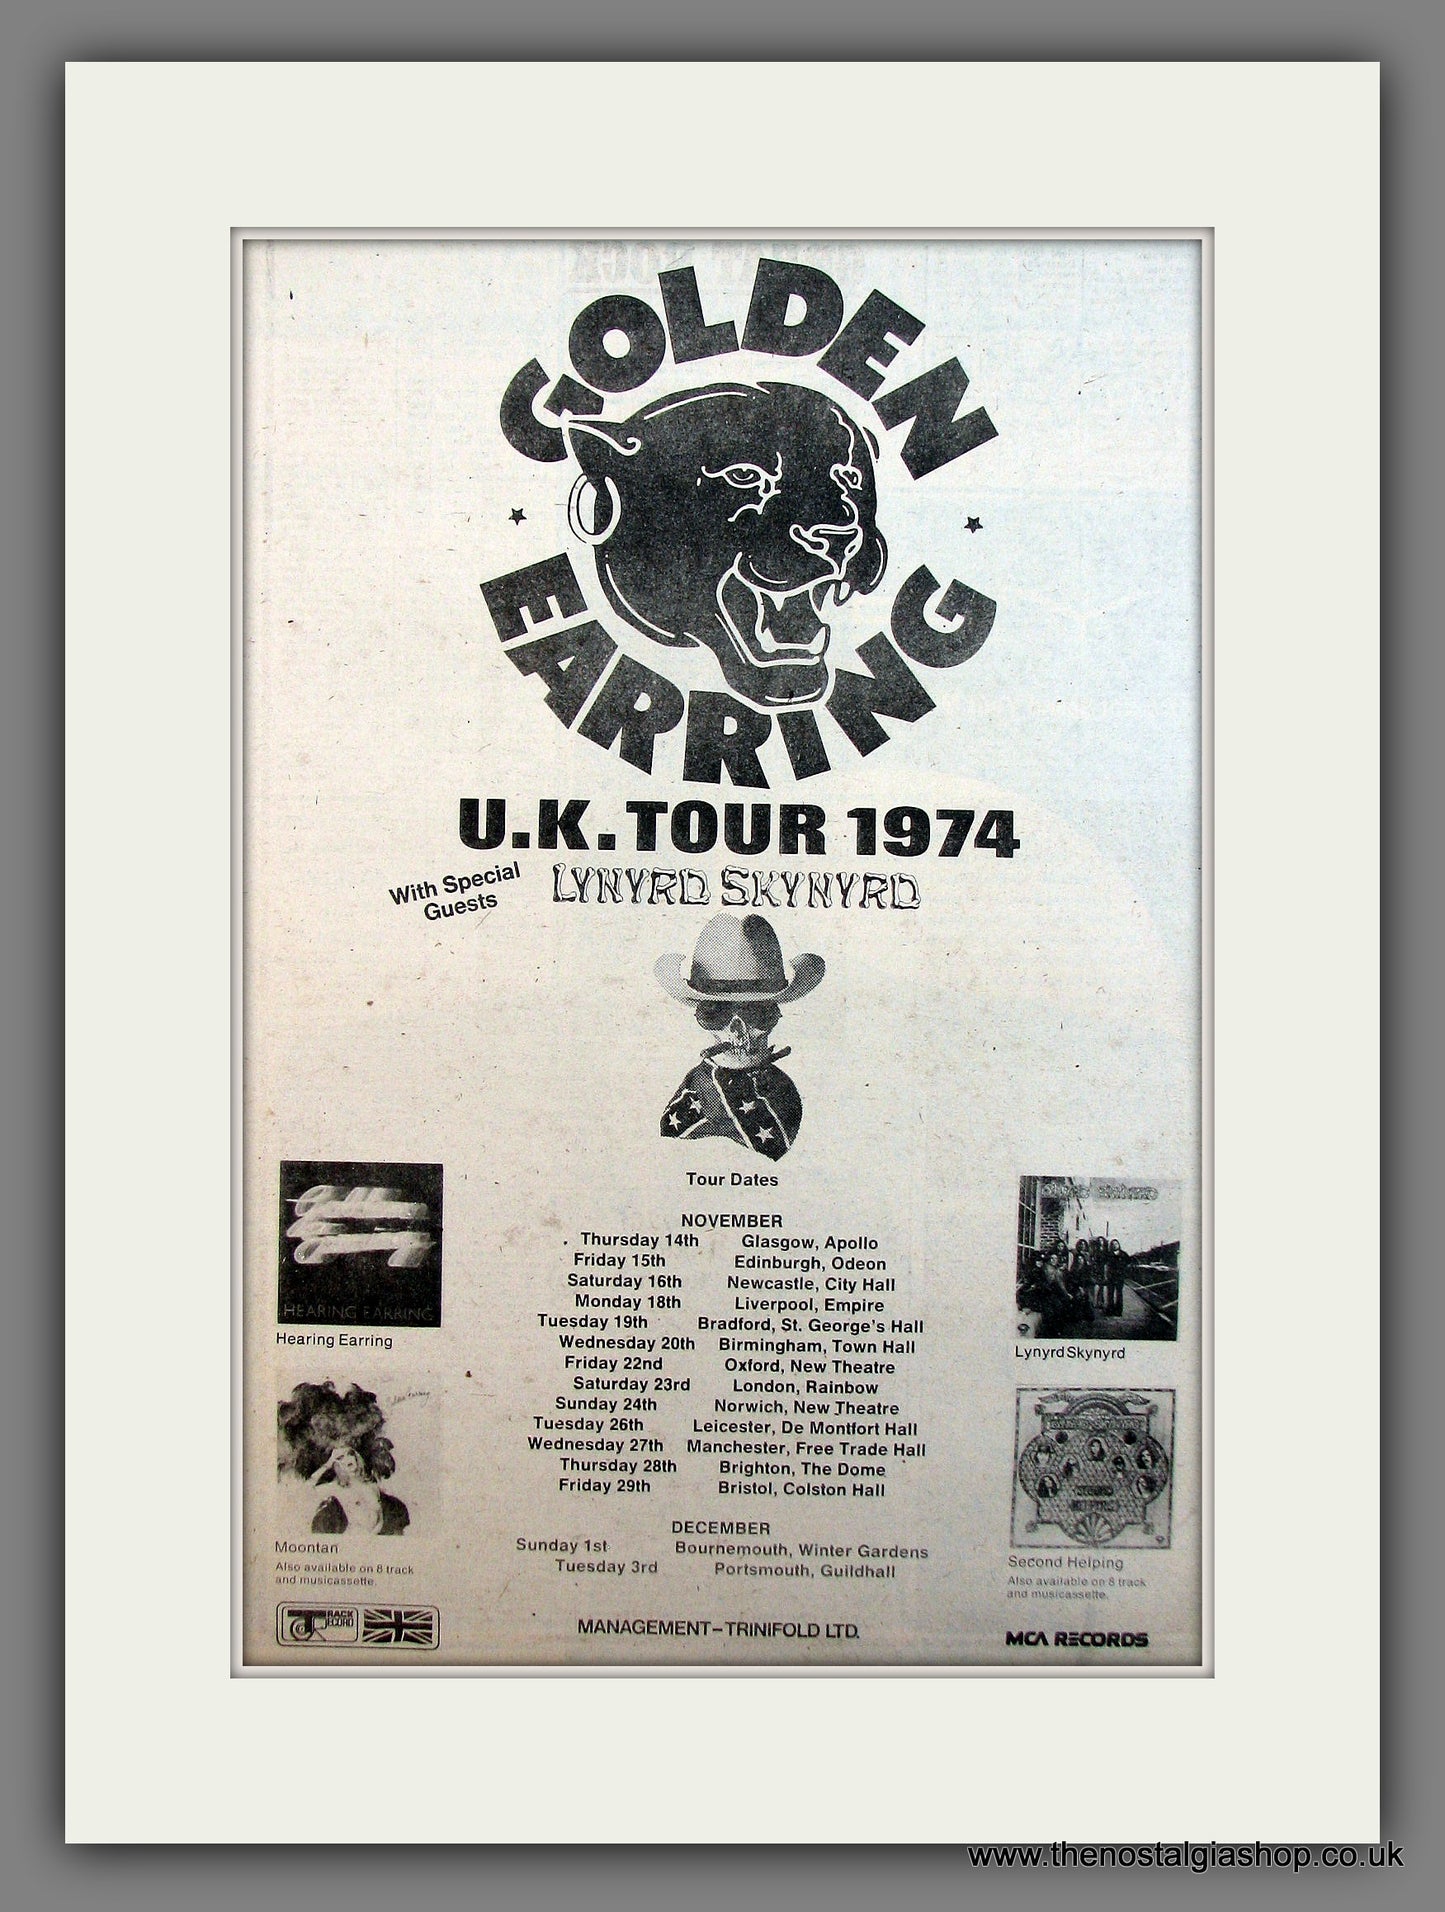 Golden Earring U.K Tour Dates . Original Vintage Advert 1974 (ref AD13248)